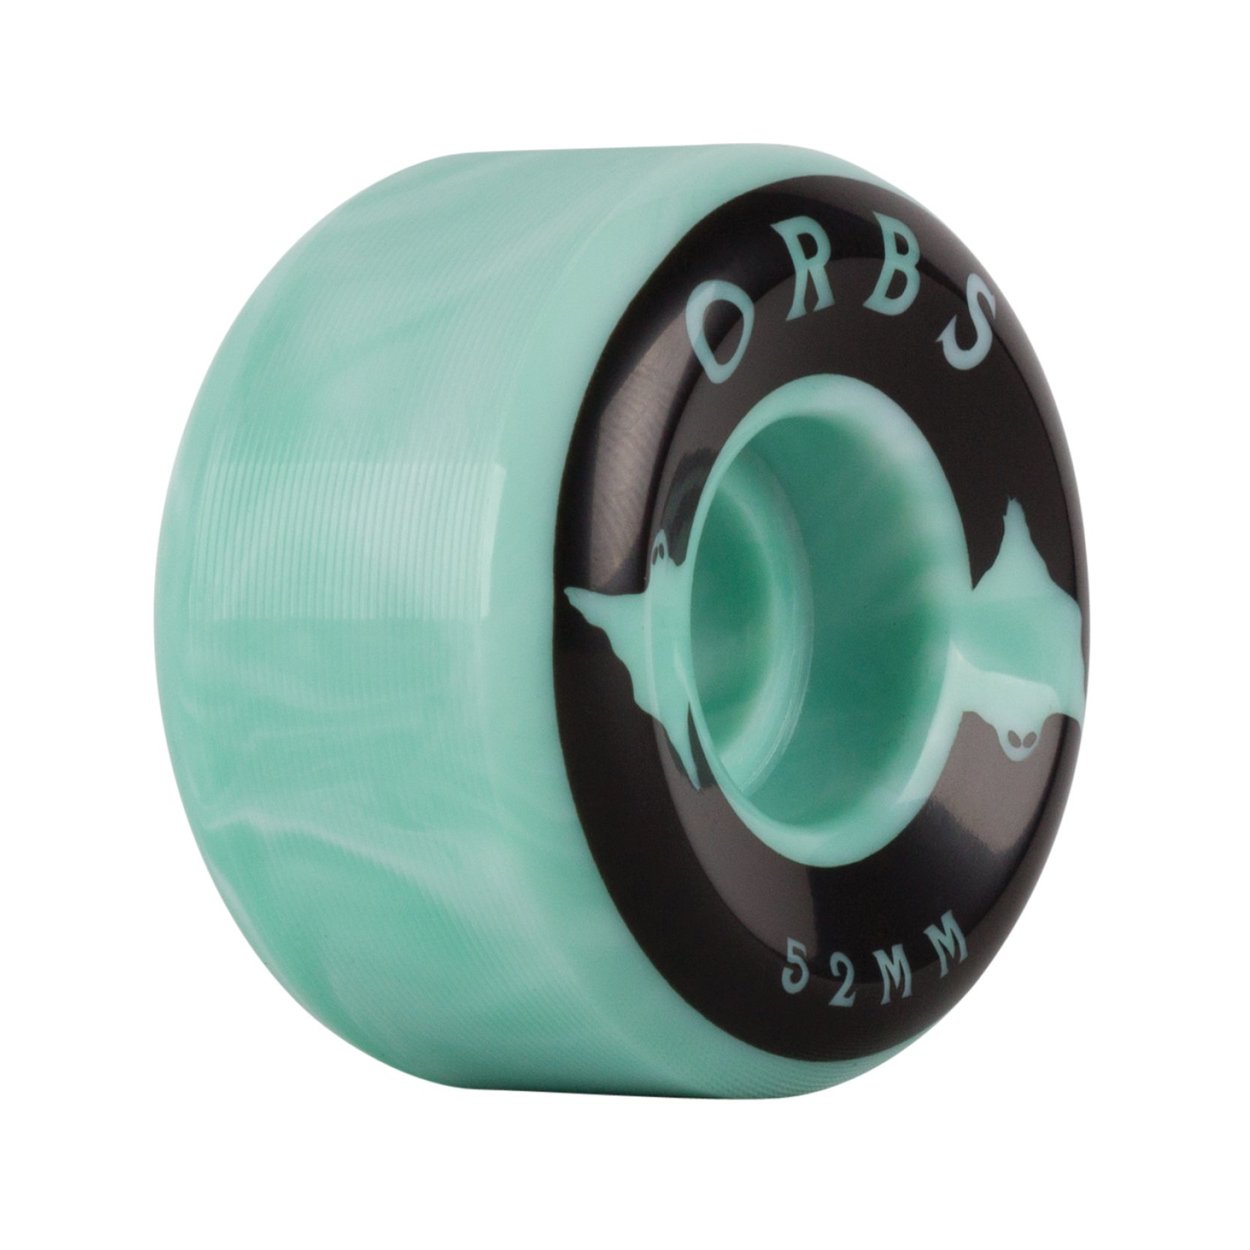 Orbs 99A Full Conical Specter Swirl Skateboard Wheels - Teal/White